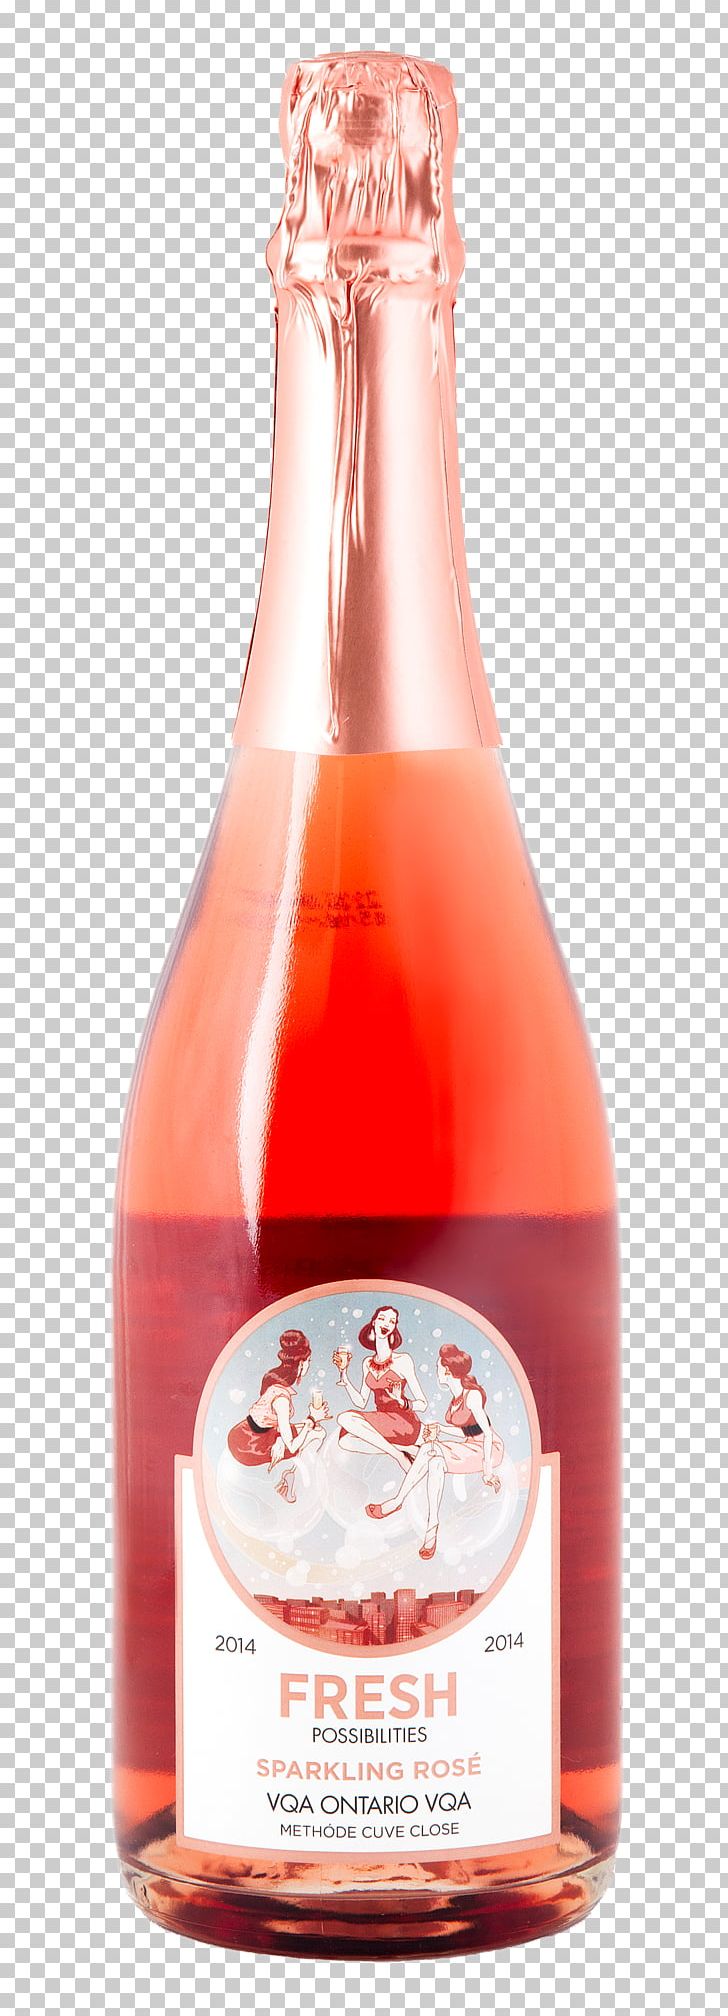 Liqueur Pomegranate Juice Wine Glass Bottle Sweet Chili Sauce PNG, Clipart, Bottle, Drink, Glass, Glass Bottle, Juice Free PNG Download